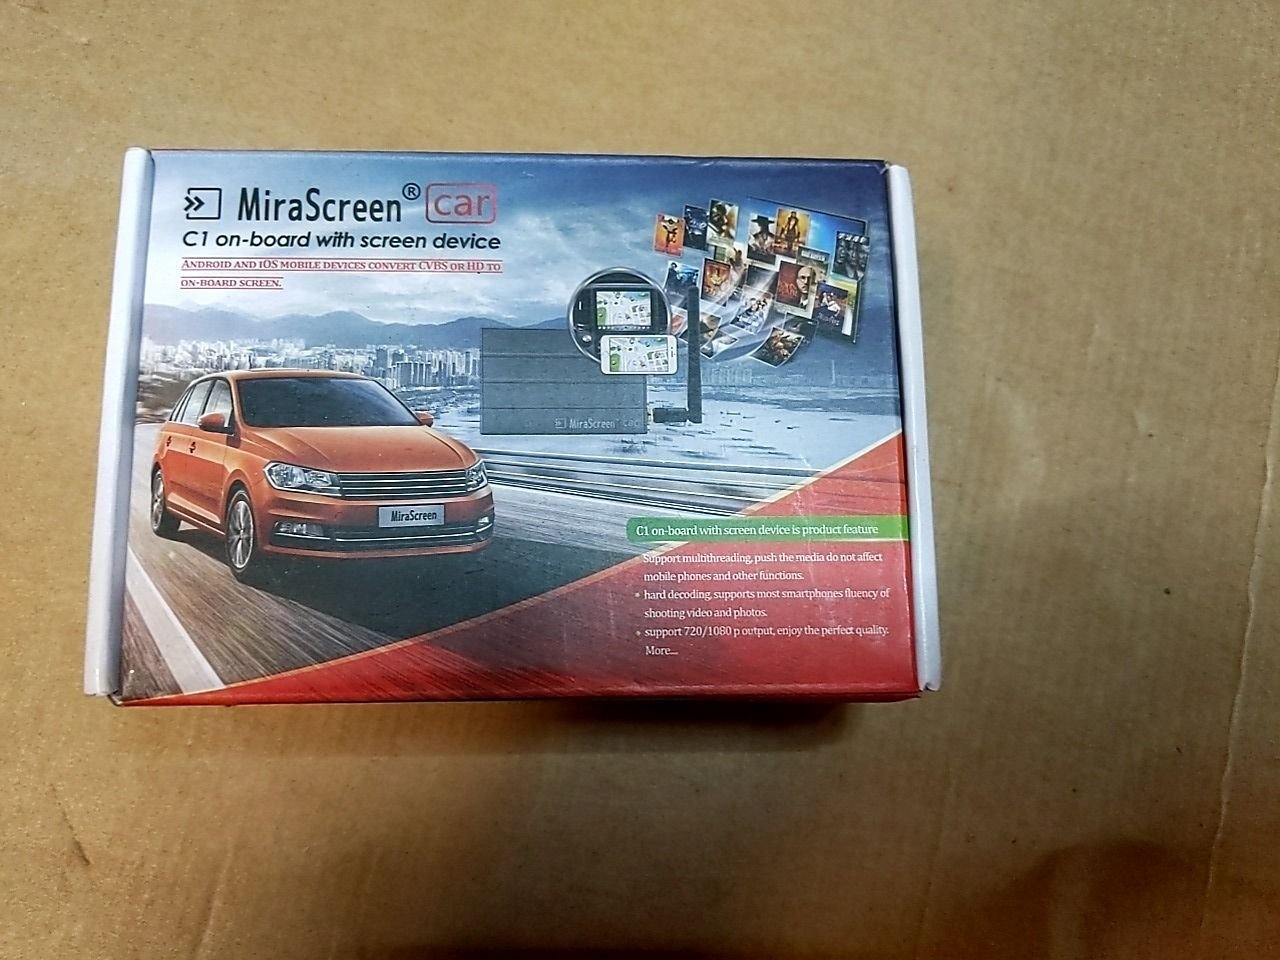 Mirascreen MiraScreen C1 onboard with screen service